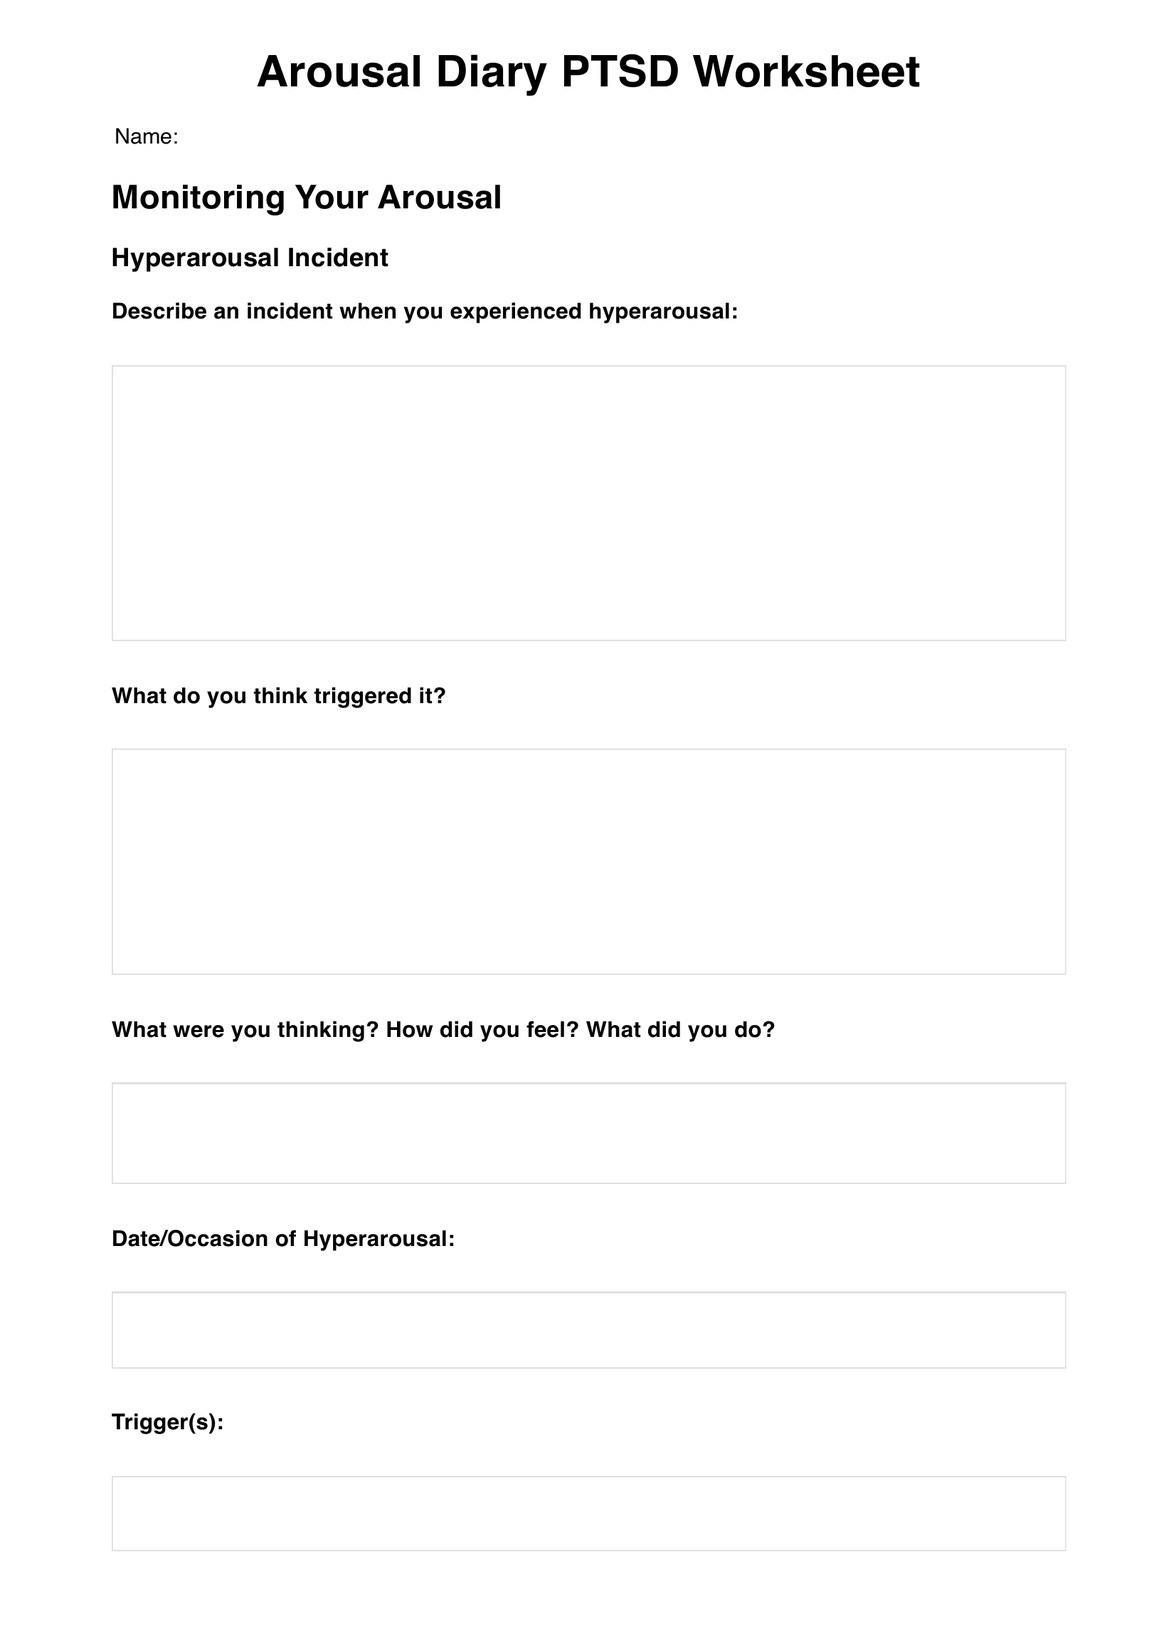 Arousal Diary PTSD Worksheet PDF Example